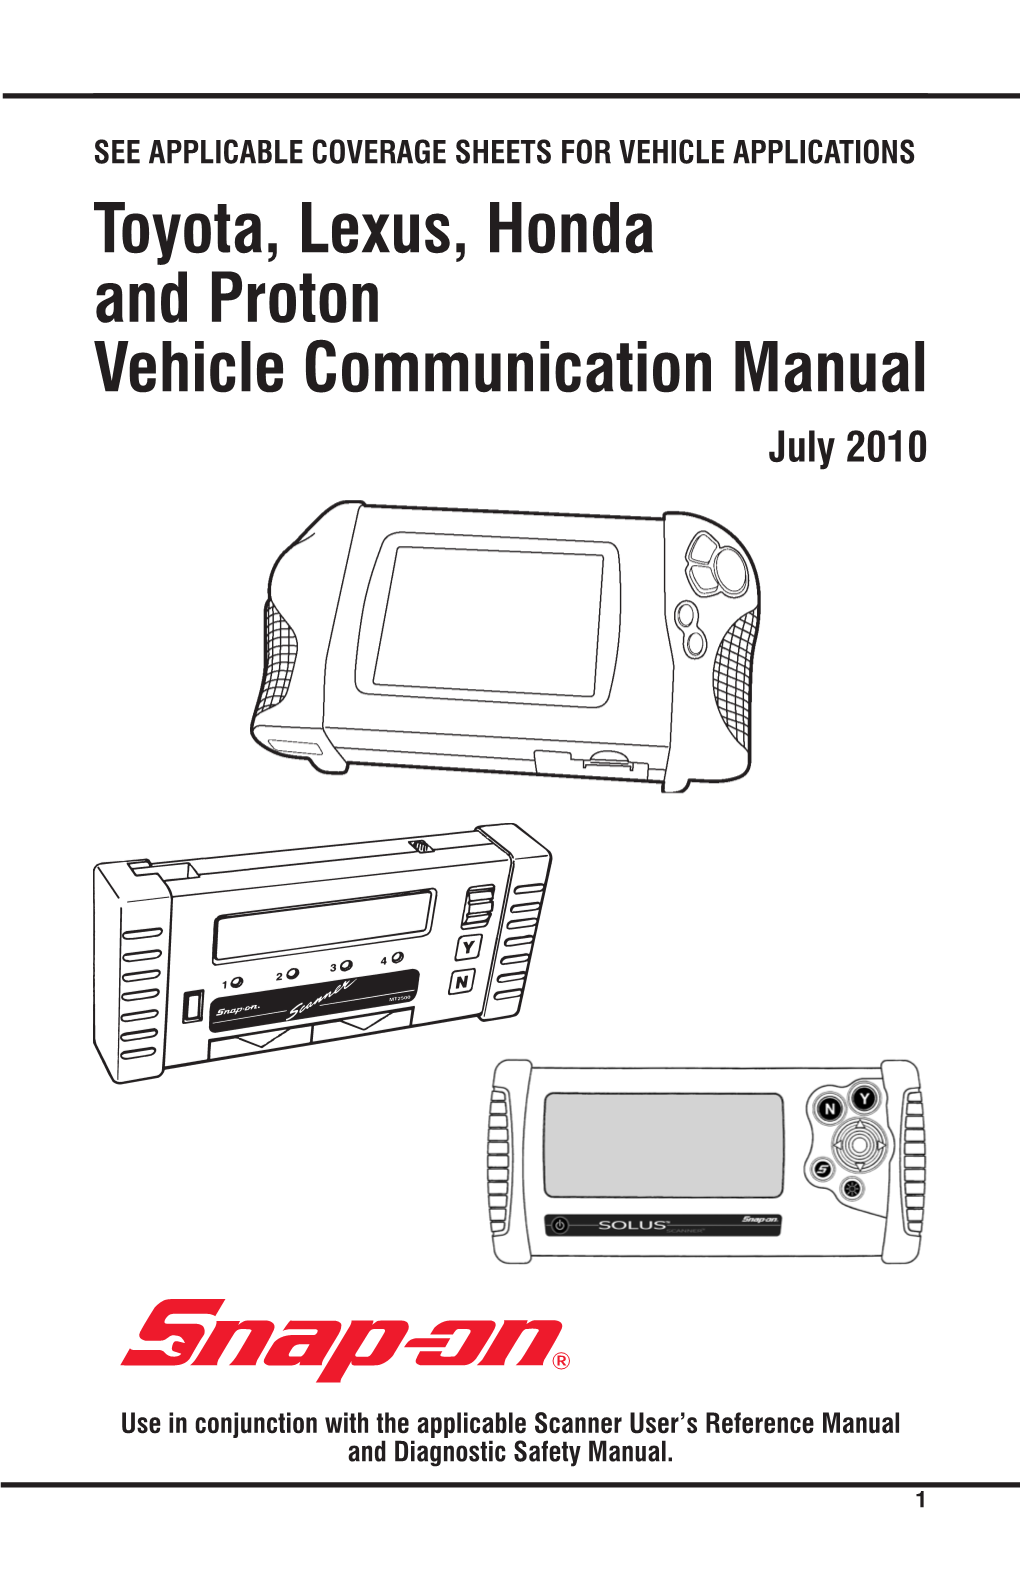 Toyota, Lexus, Honda and Proton Vehicle Communication Manual July 2010